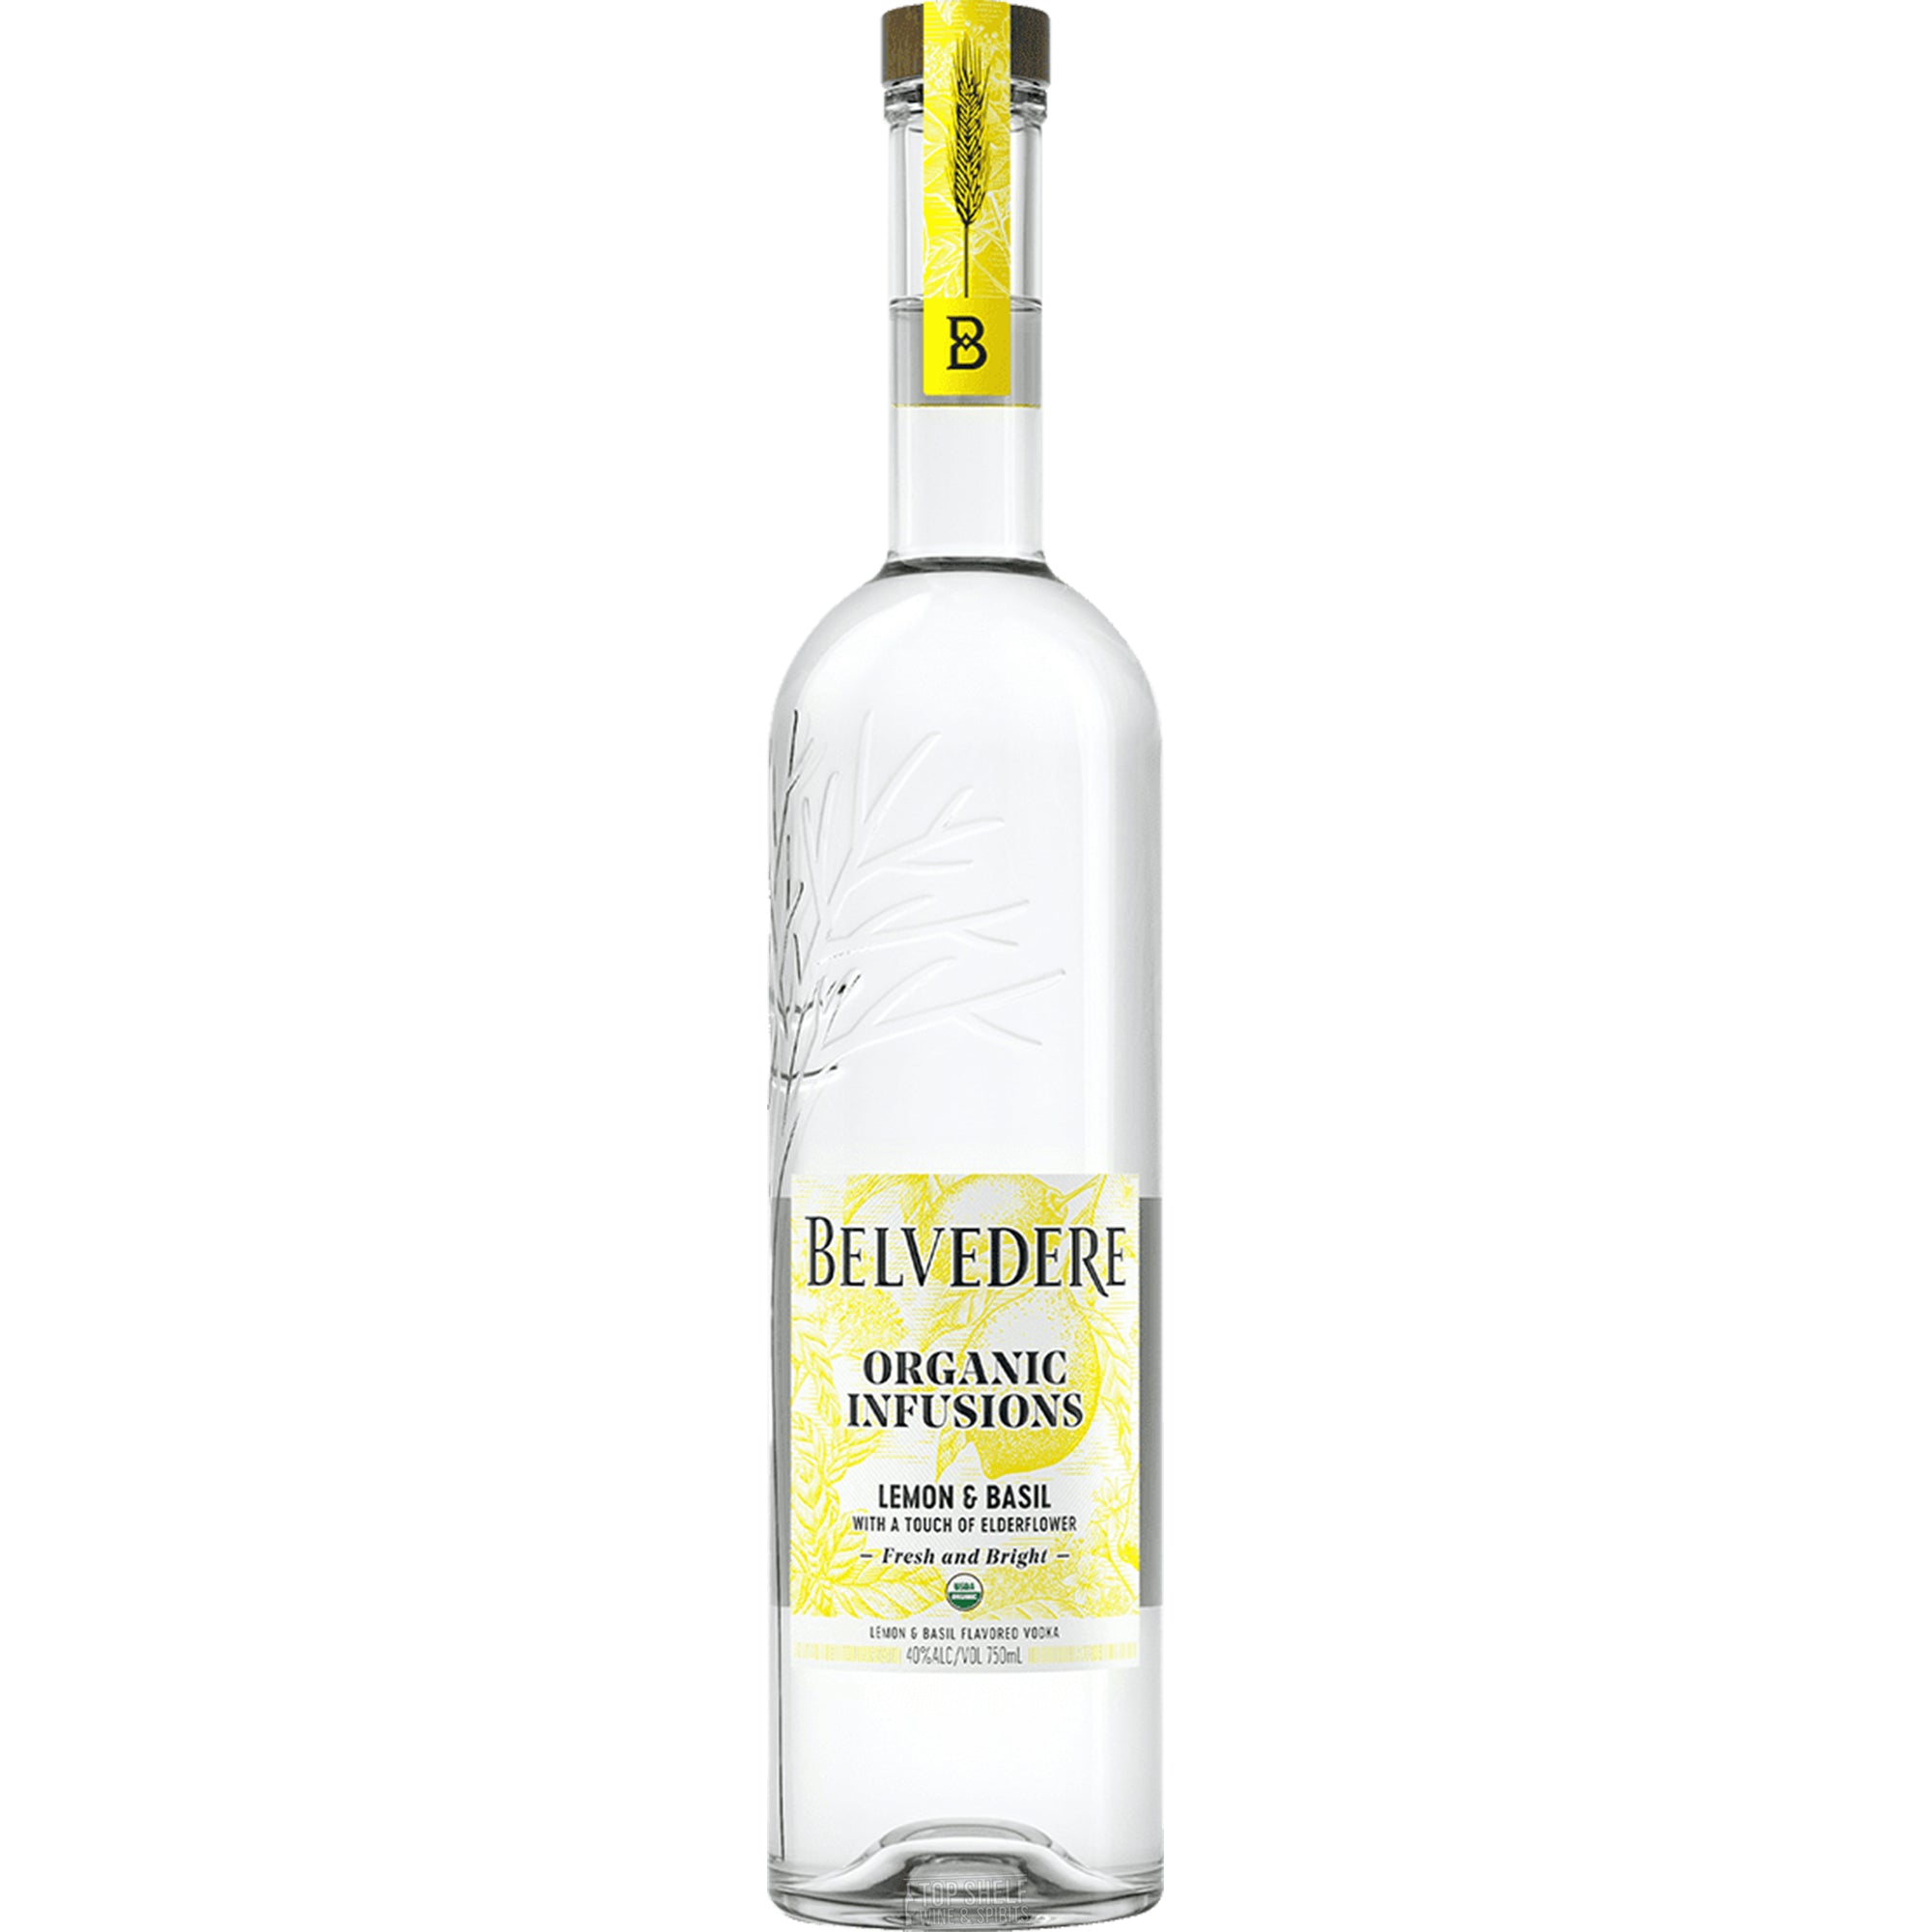 Order Belvedere Organic Infusions Lemon & Basil Vodka